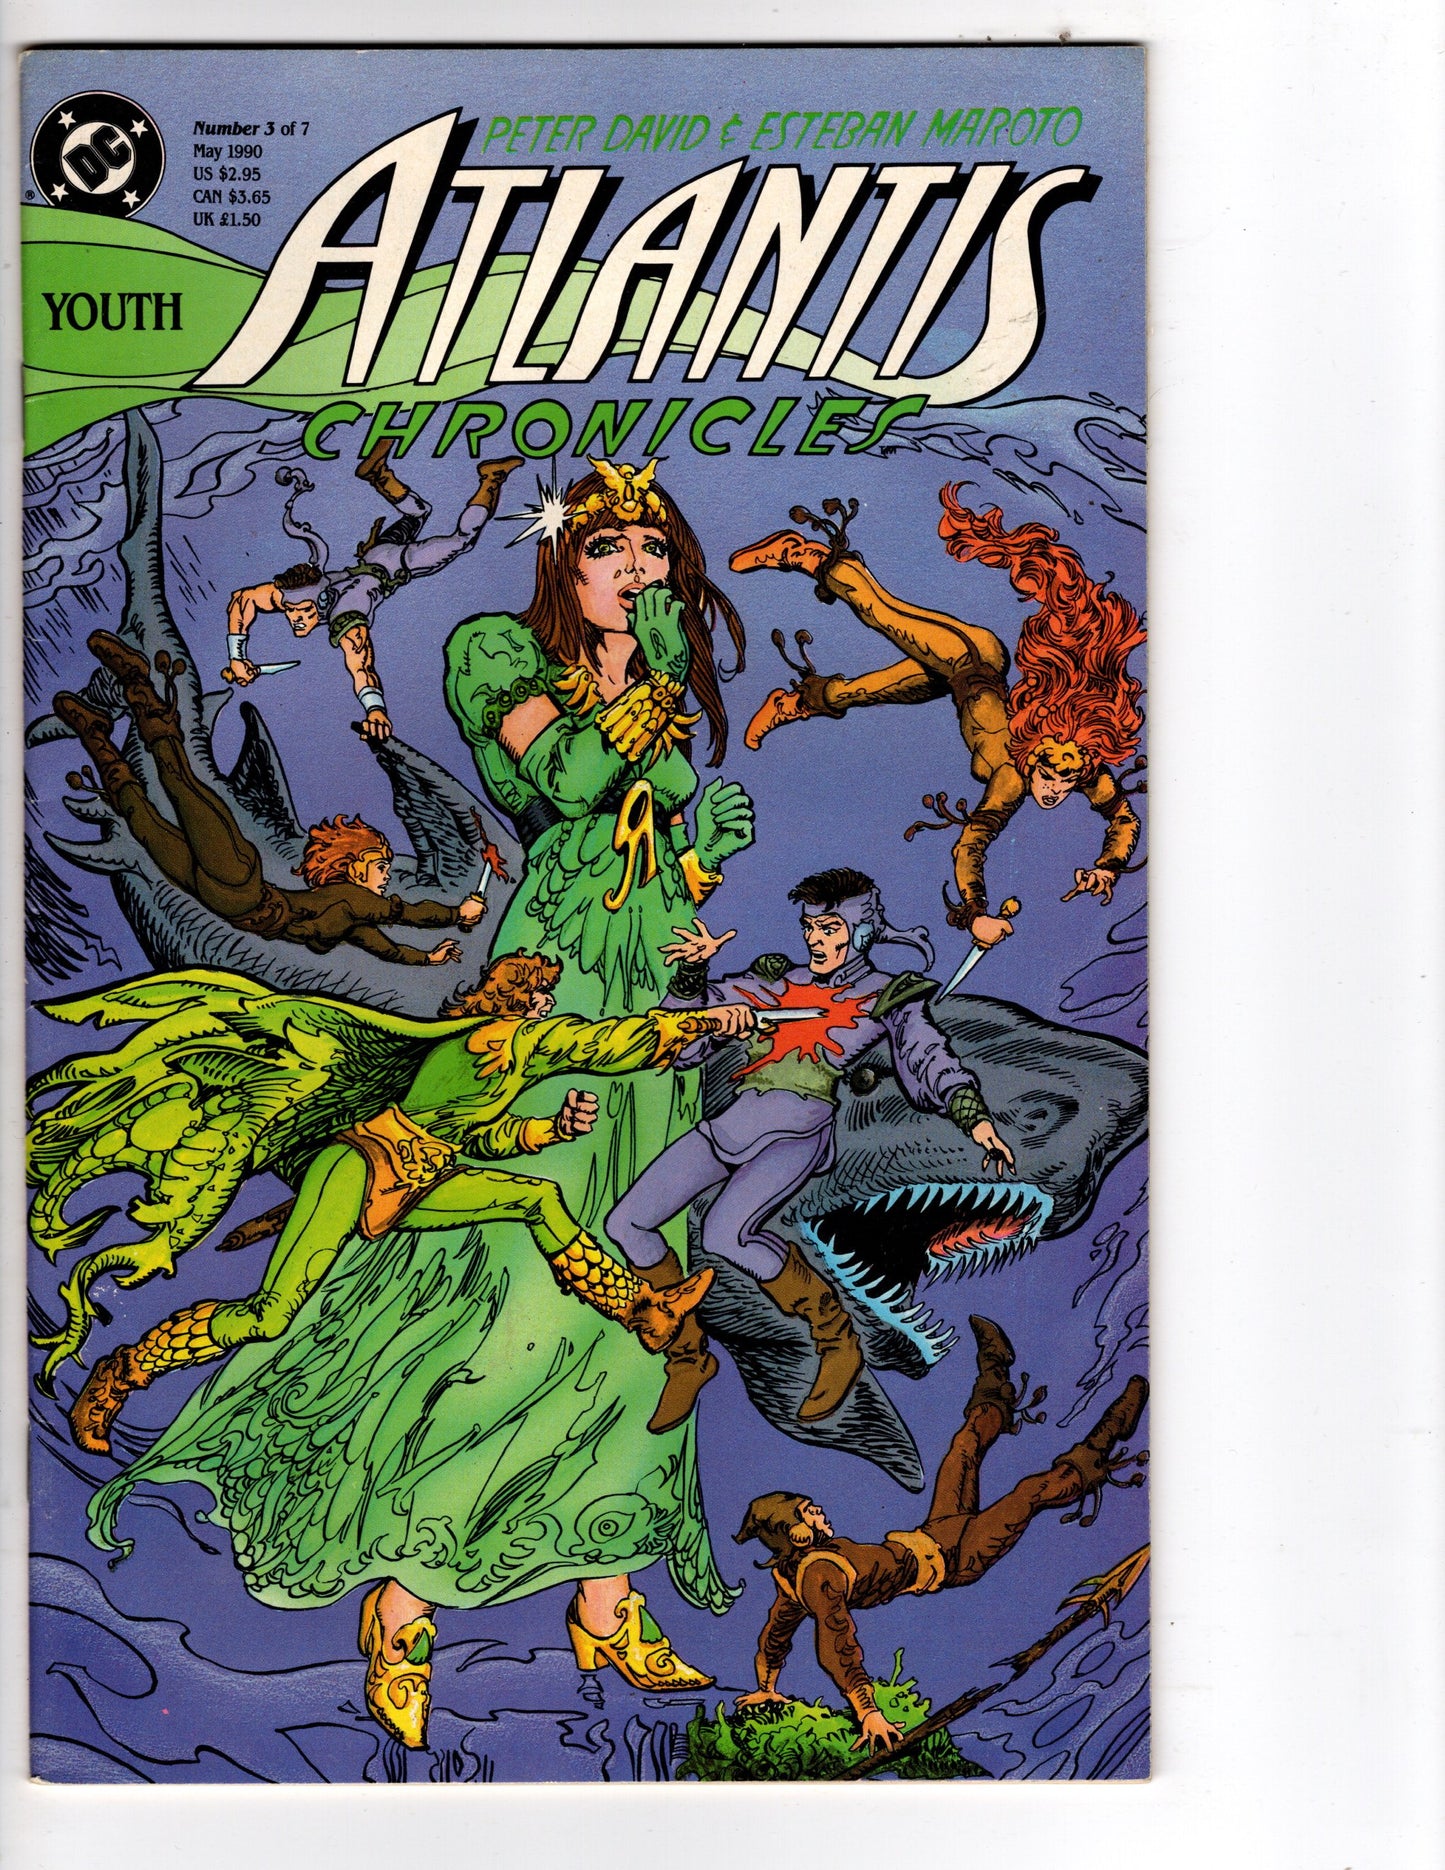 Atlantis Chronicles #3